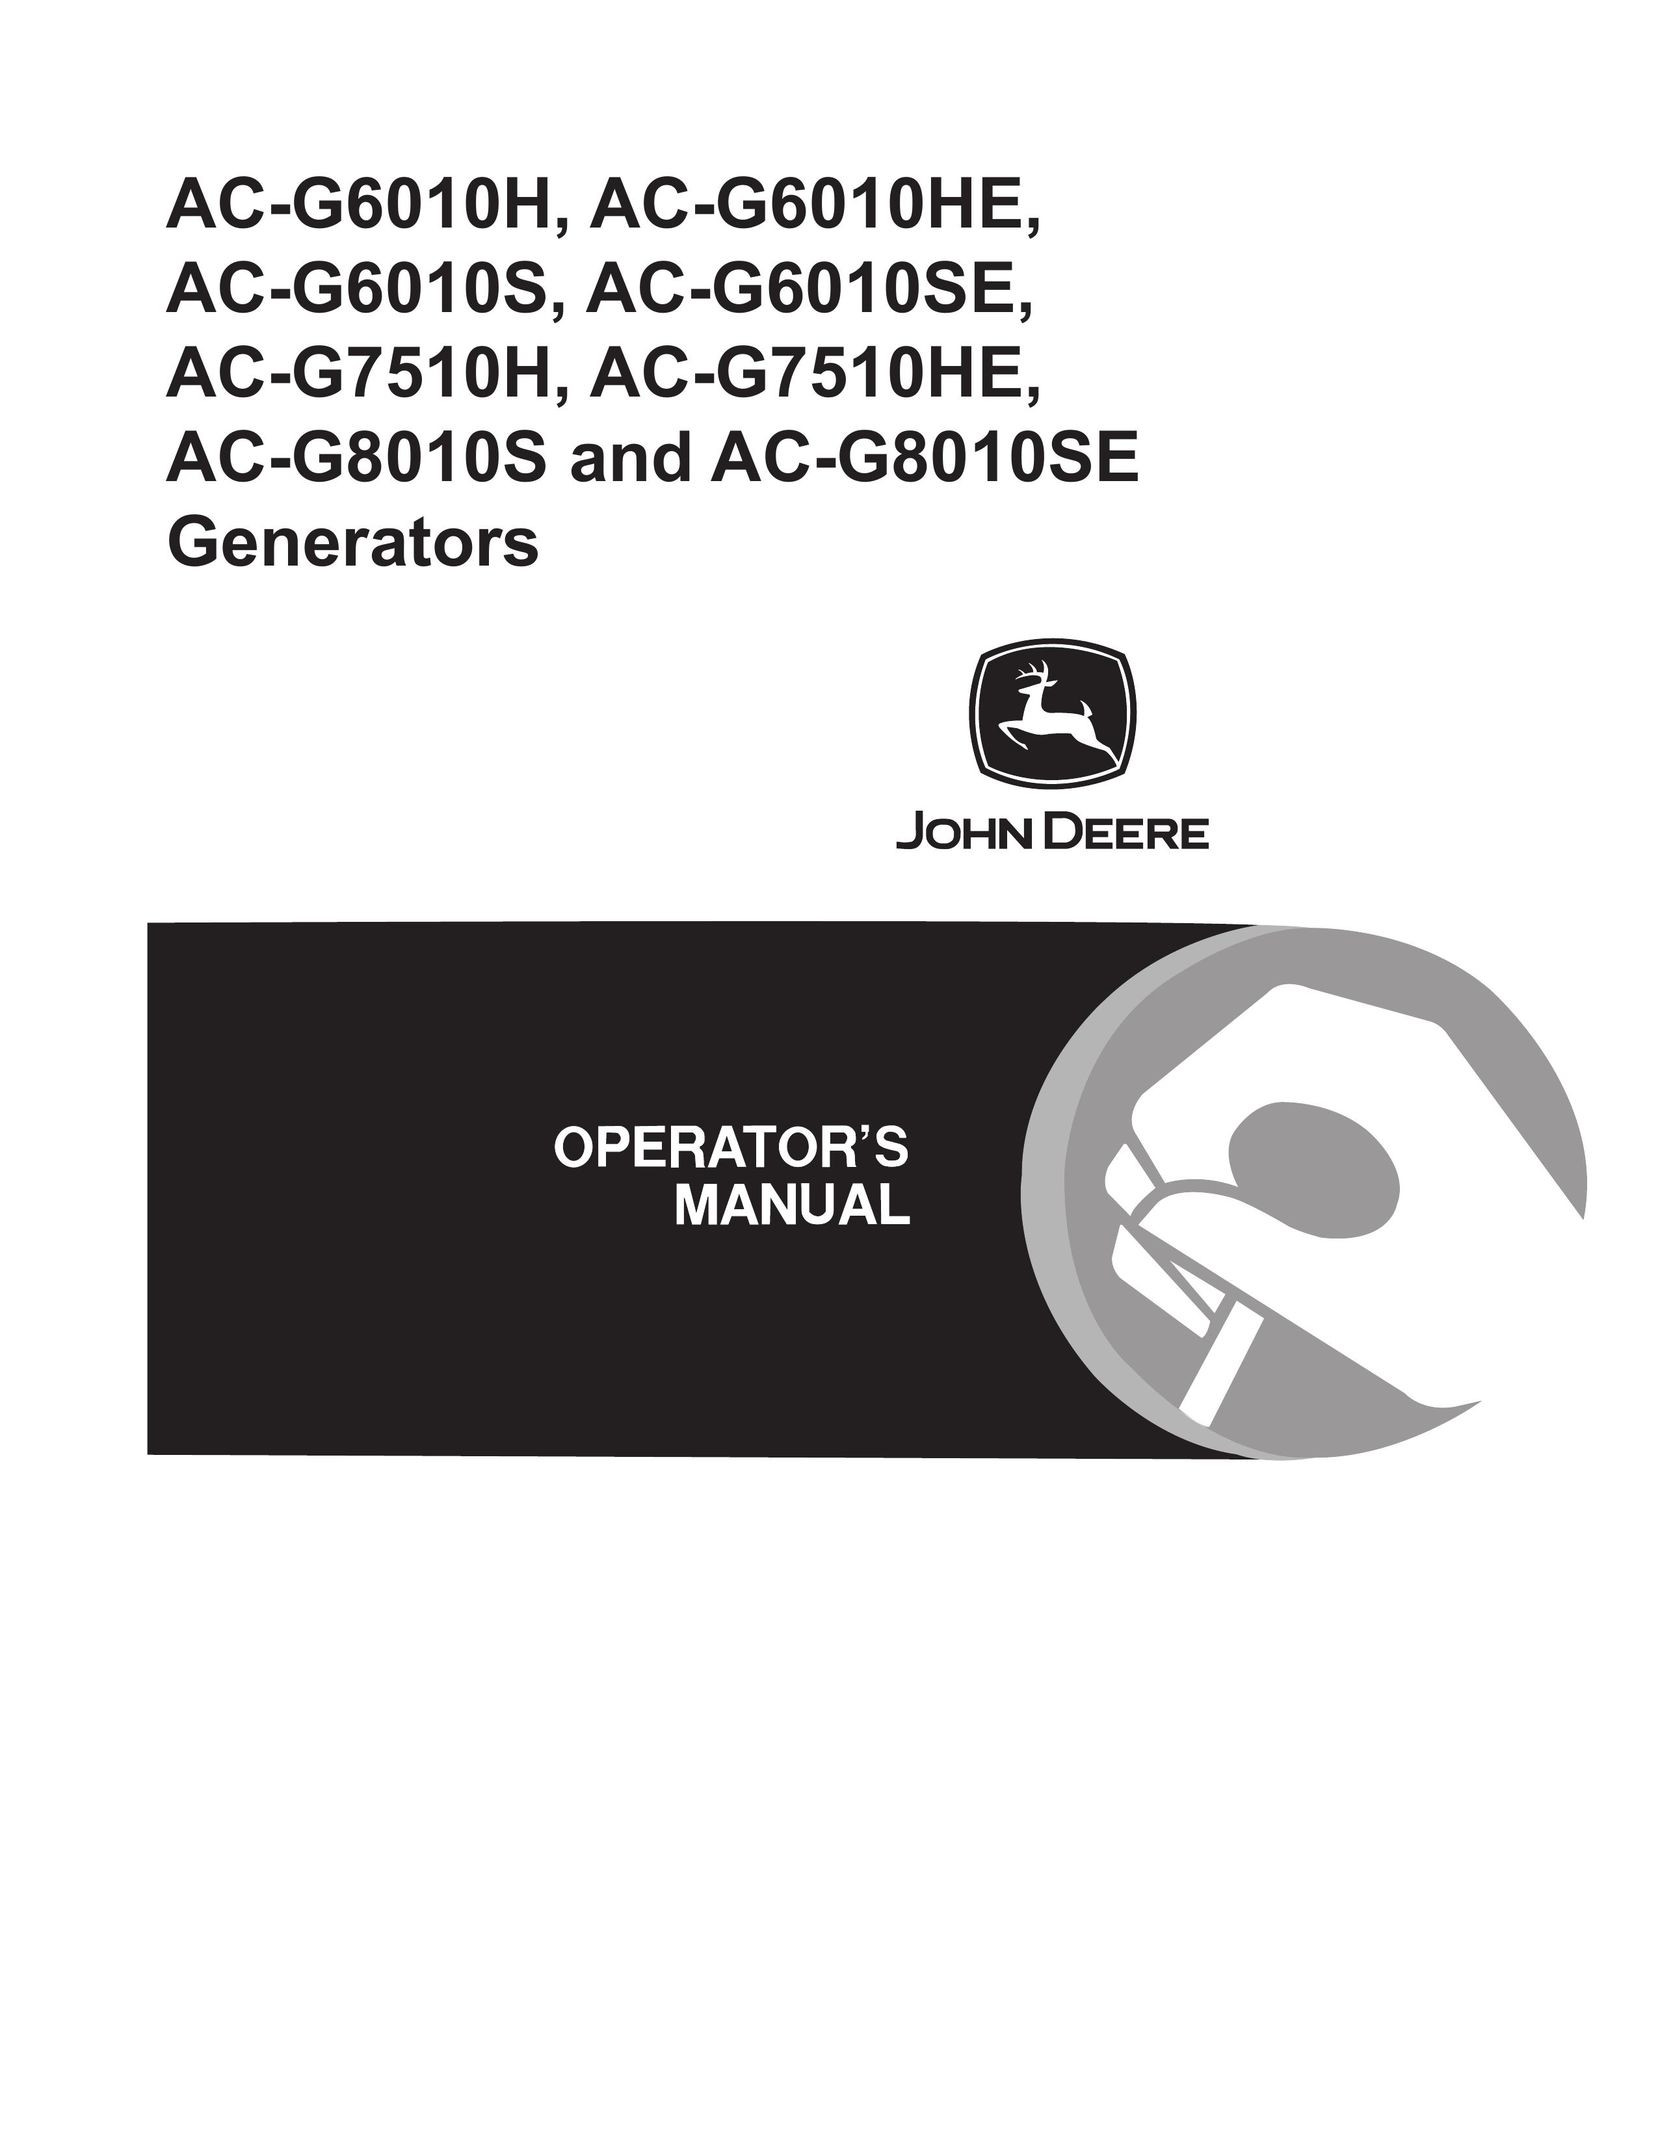 John Deere AC-G7510HE Welding System User Manual